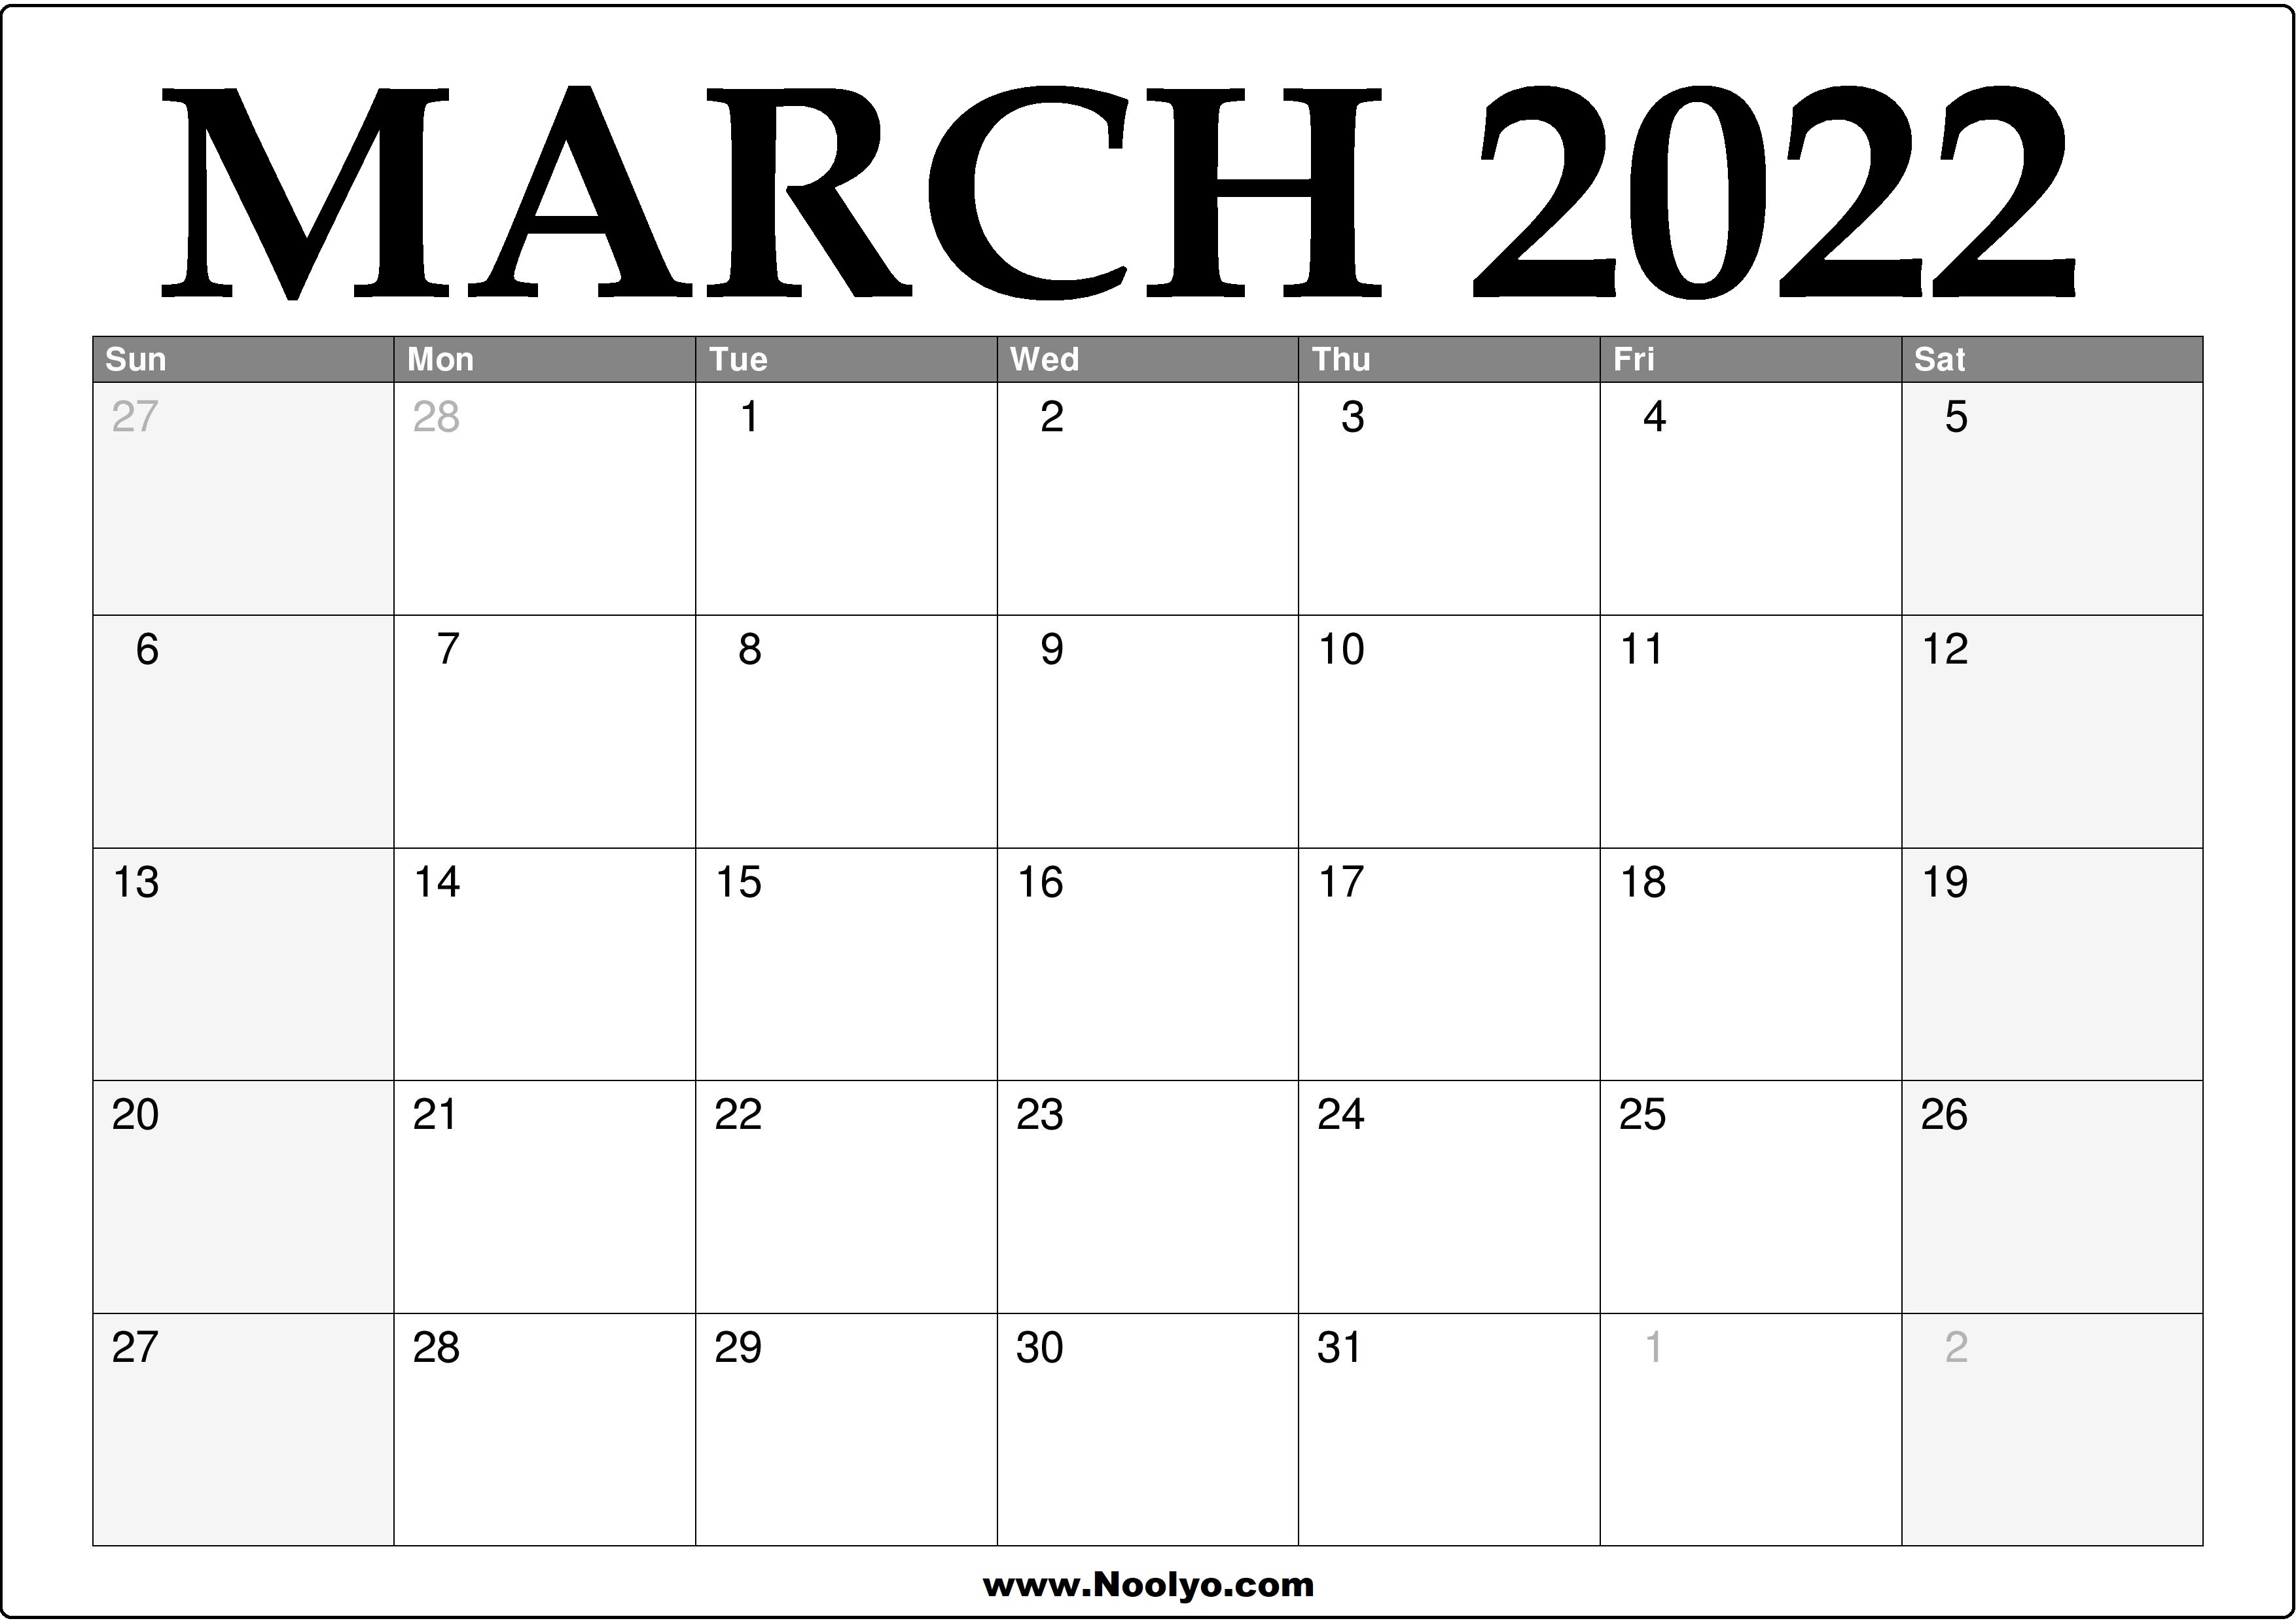 Сборник март 2023. March 2022. Календарь март. Календарь март 2022. Calendar March 2022.